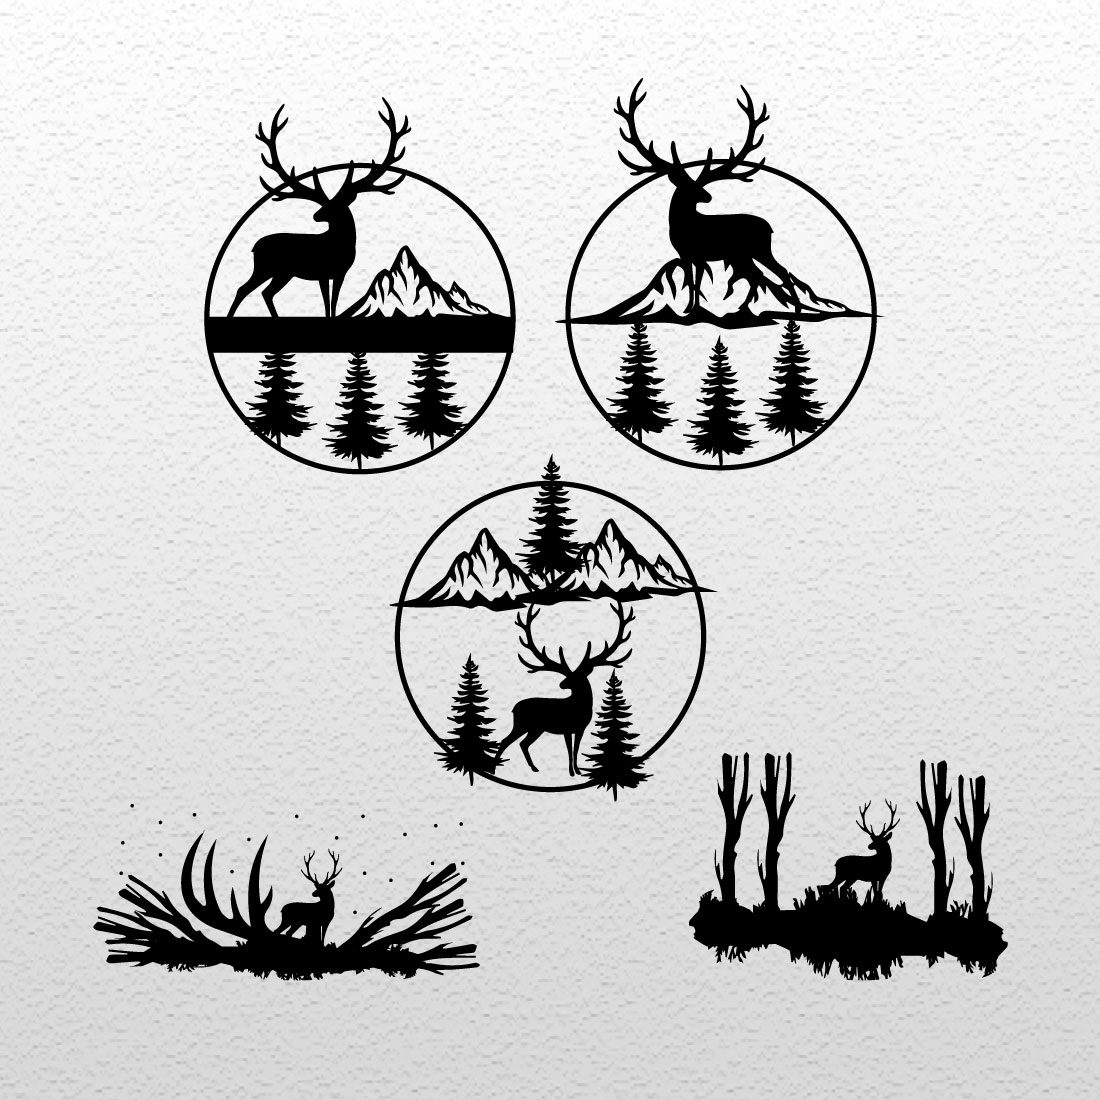 Pack of black charming images of deer